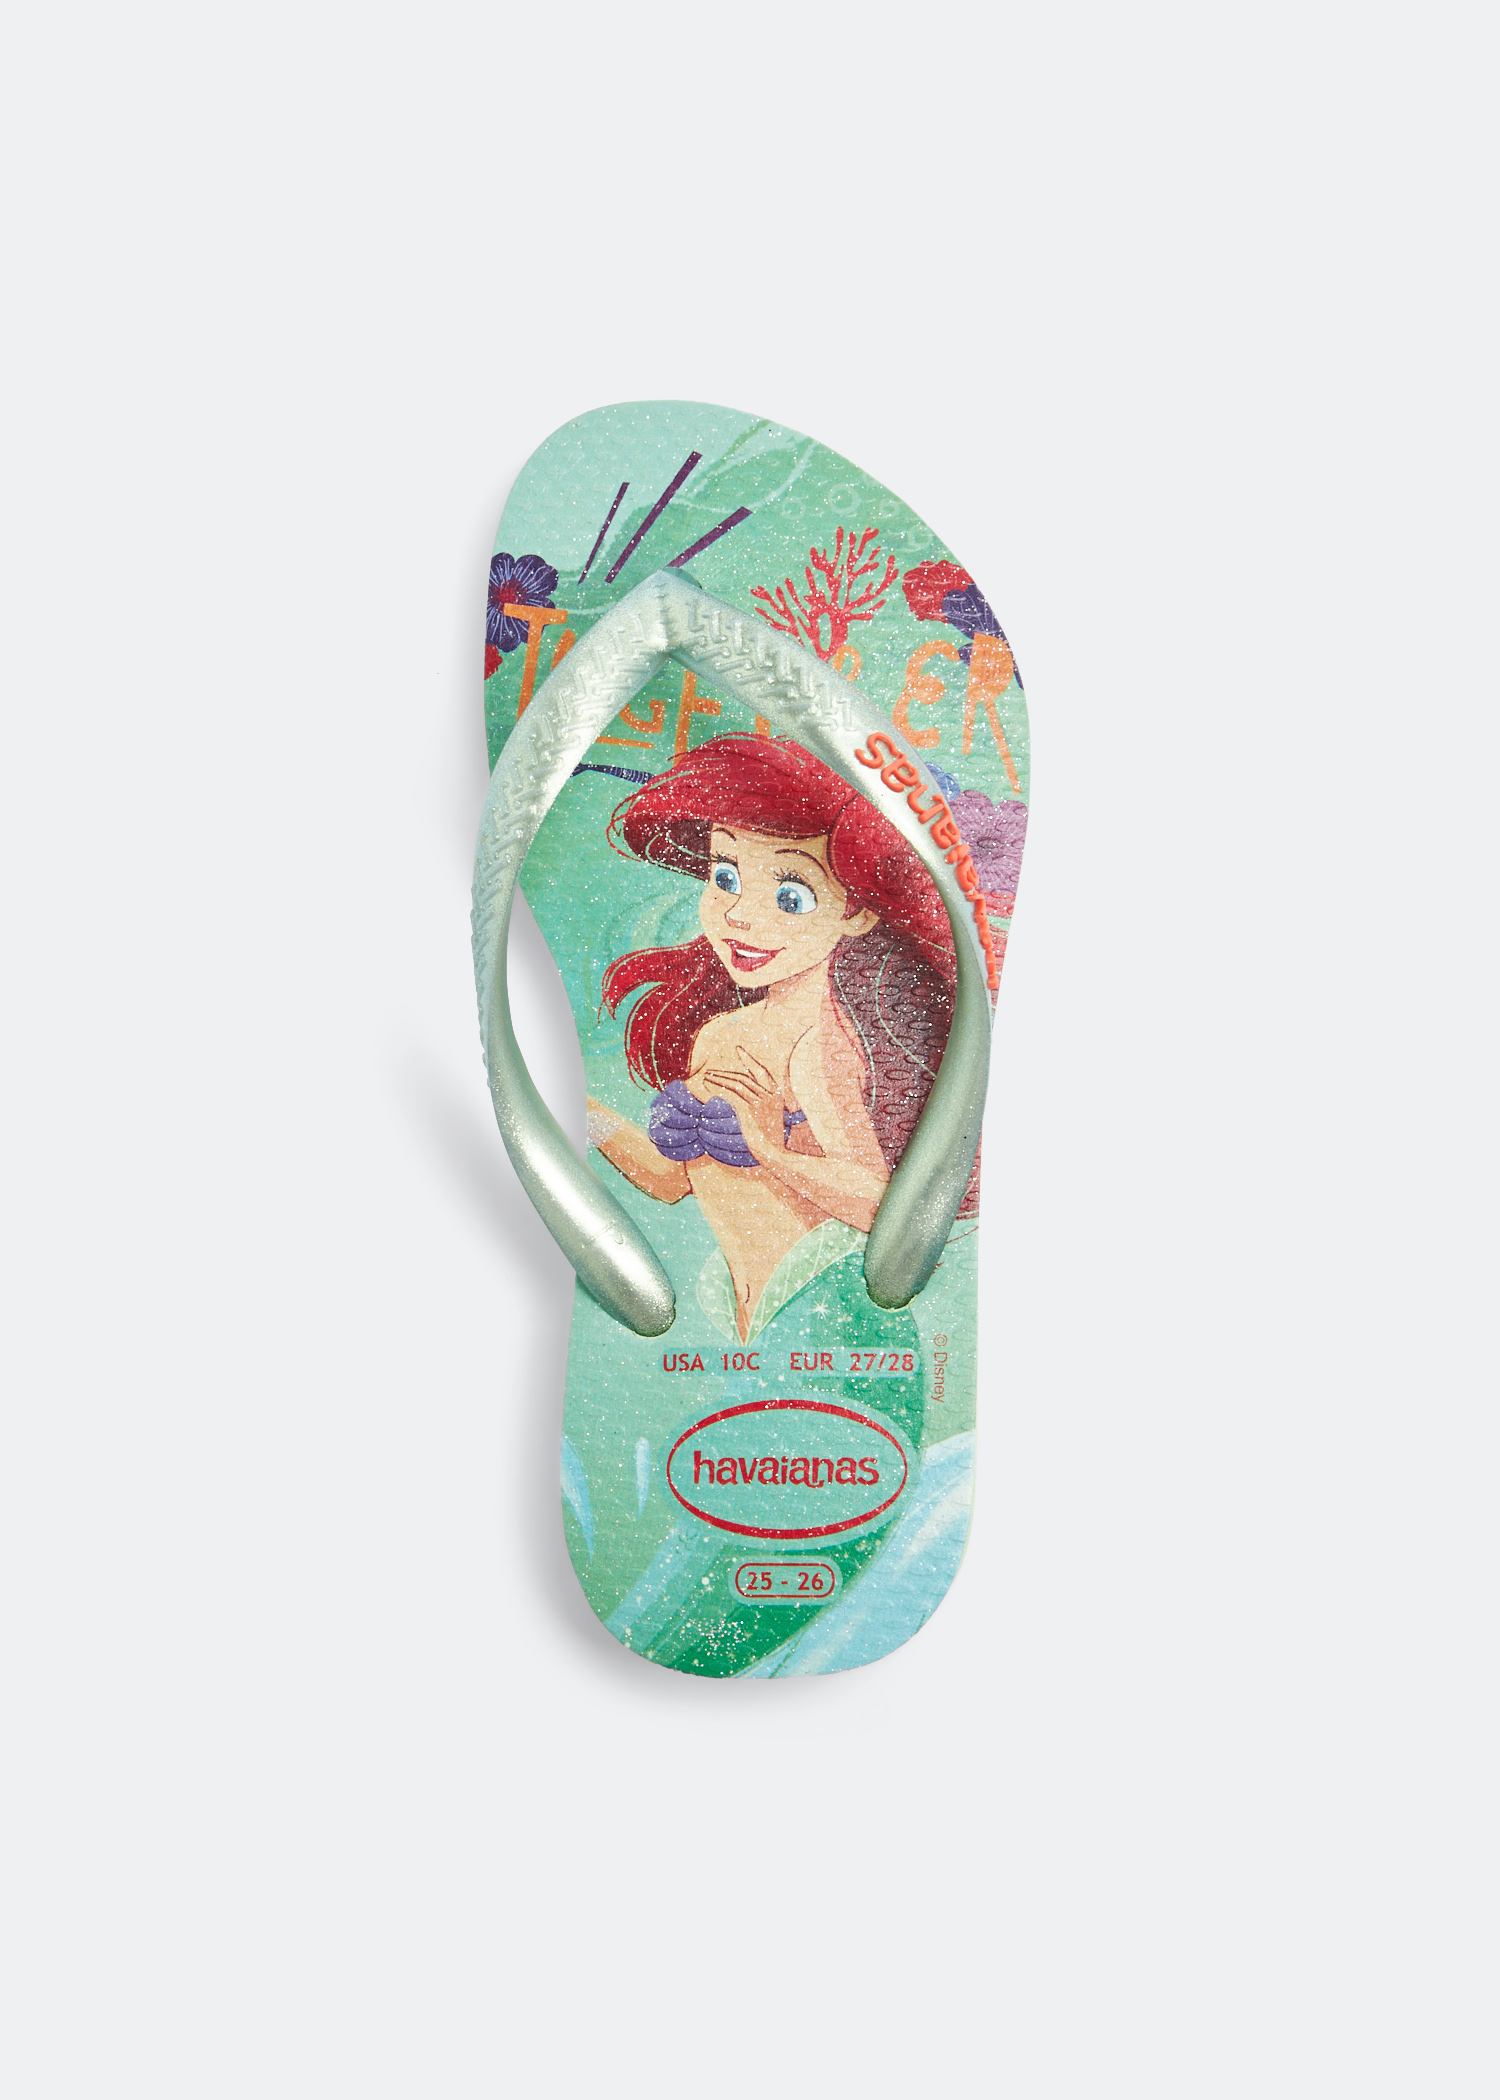 Disney Princess And Flip Flops - Buy Disney Princess And Flip